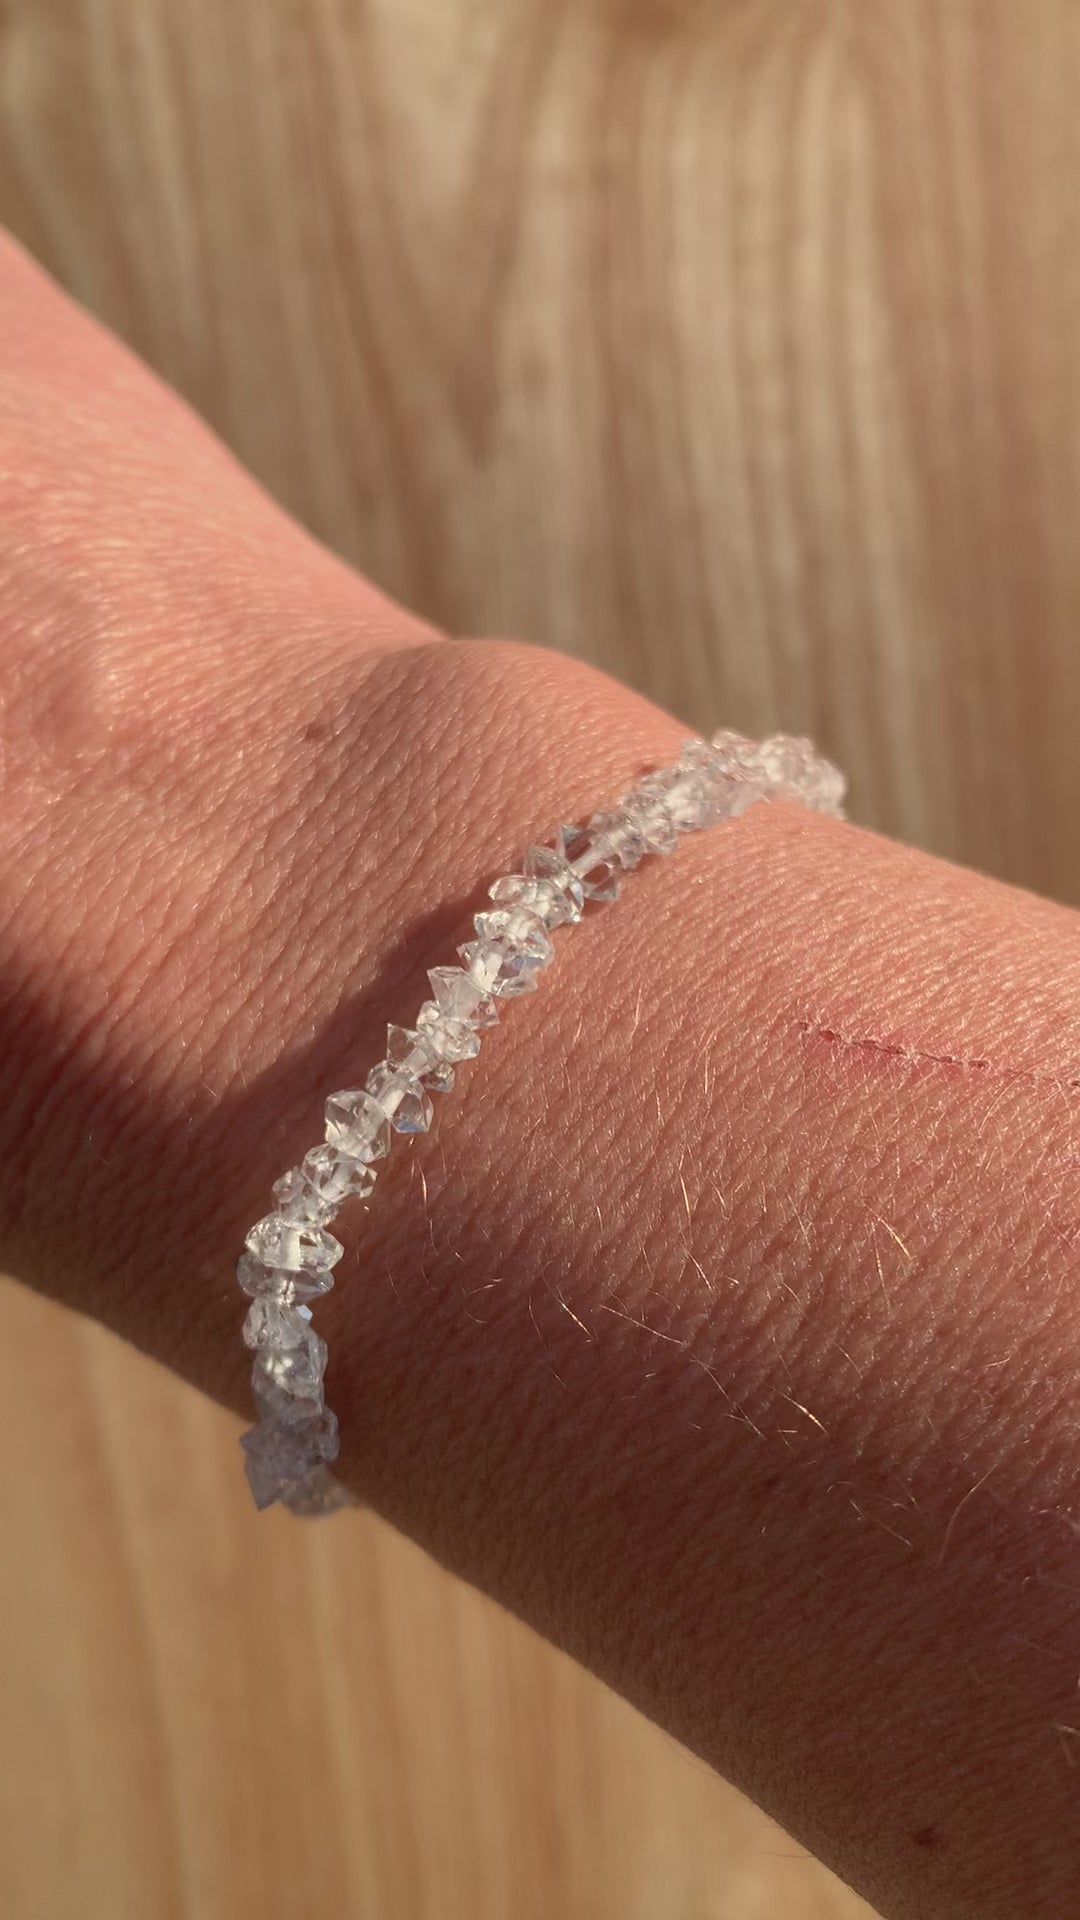 Healing Crystal Bracelets Herkimer Diamonds Sparkling in the Sun